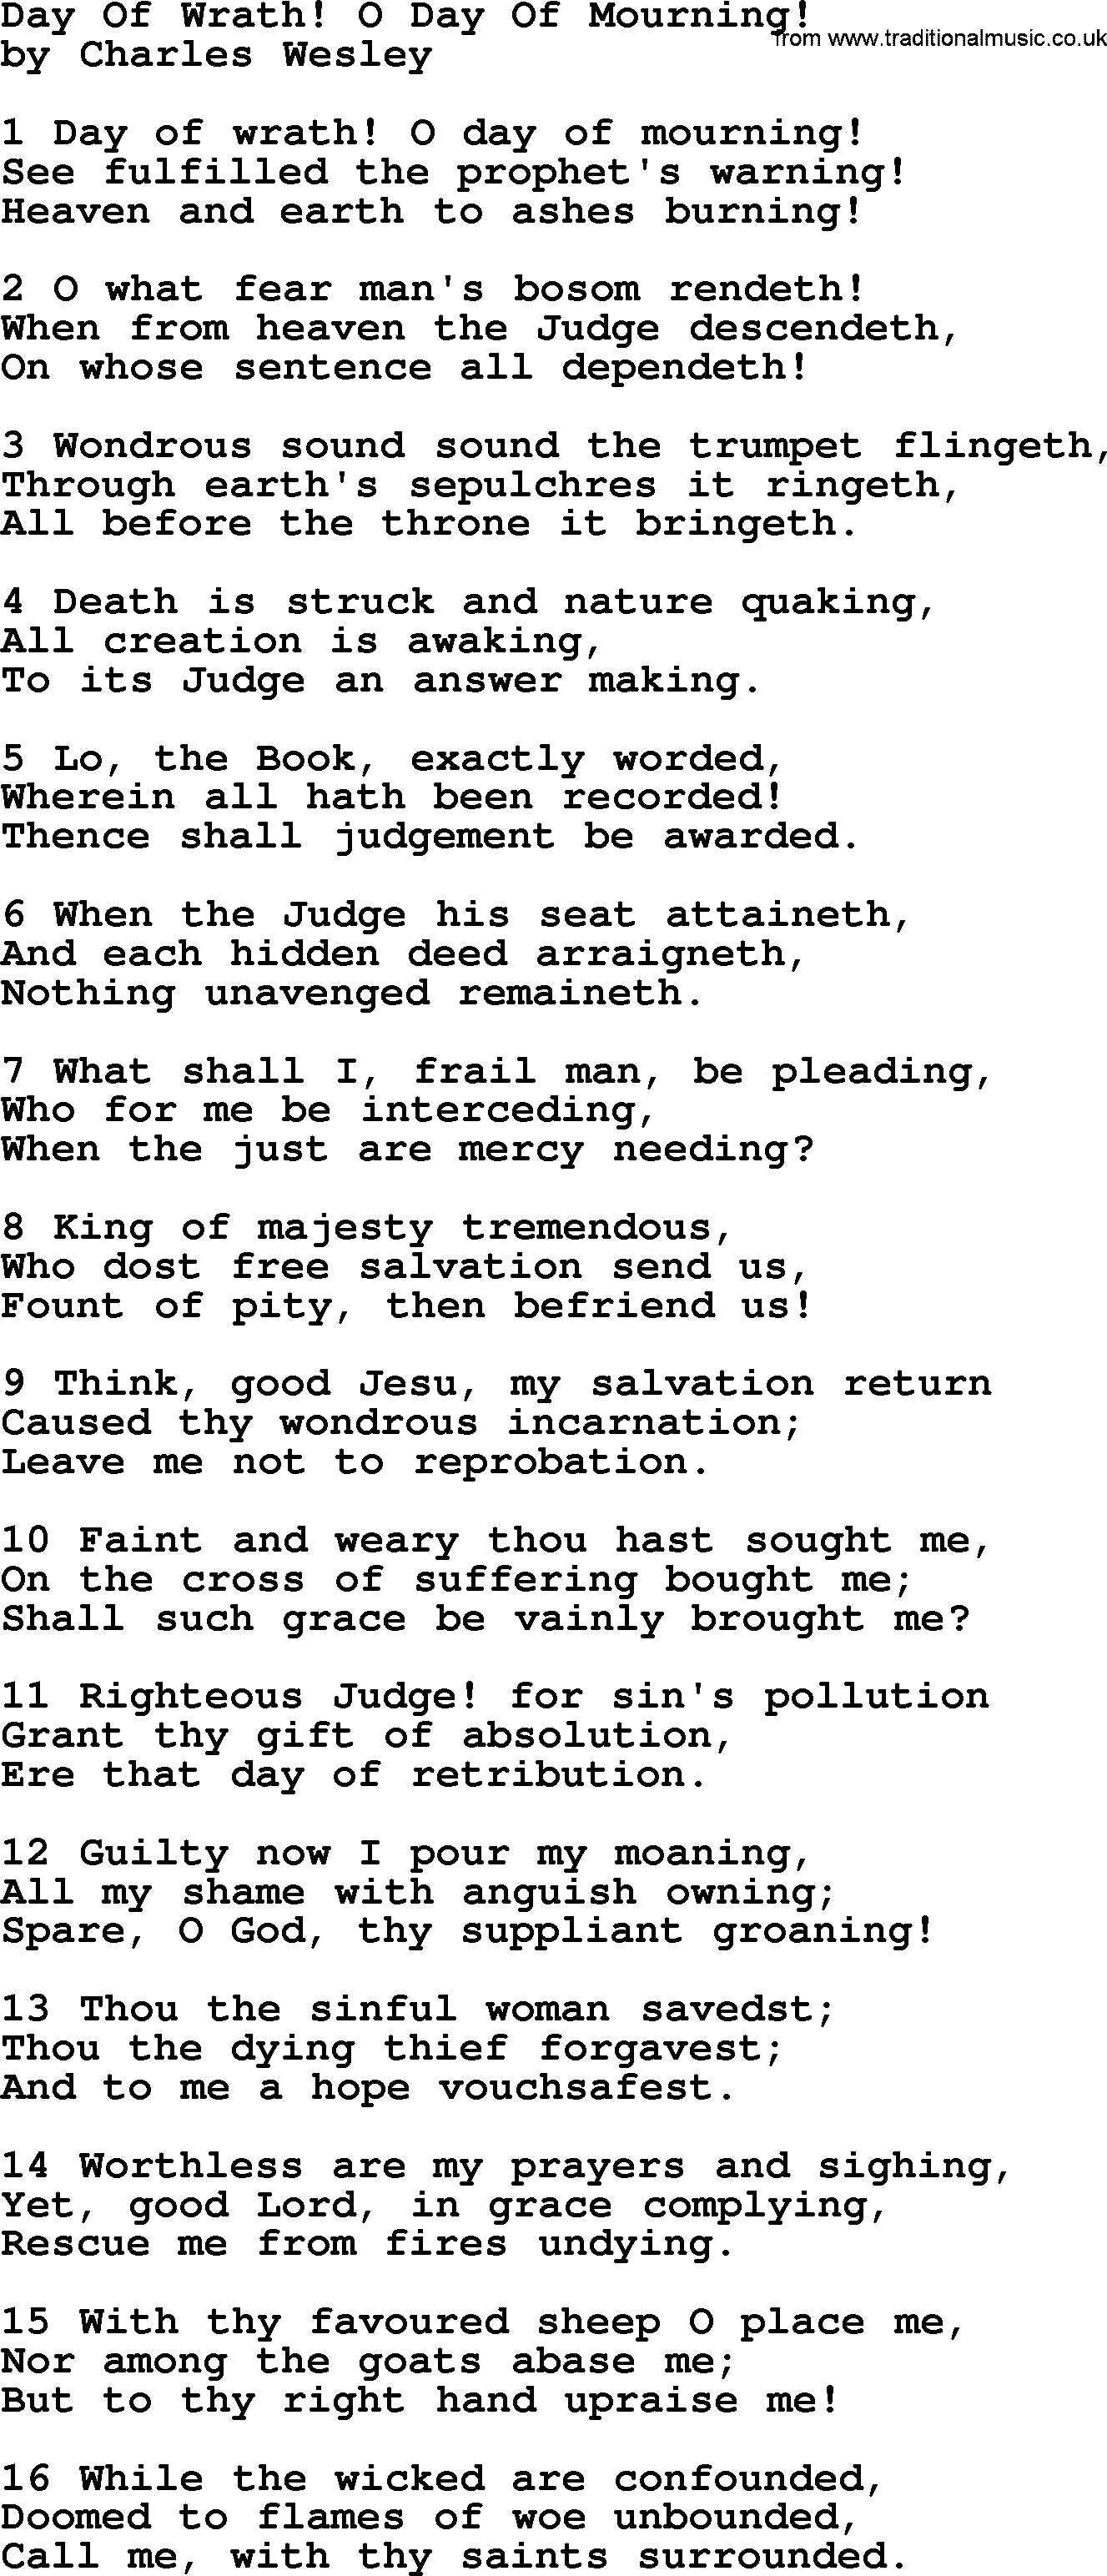 Charles Wesley hymn: Day Of Wrath! O Day Of Mourning!, lyrics